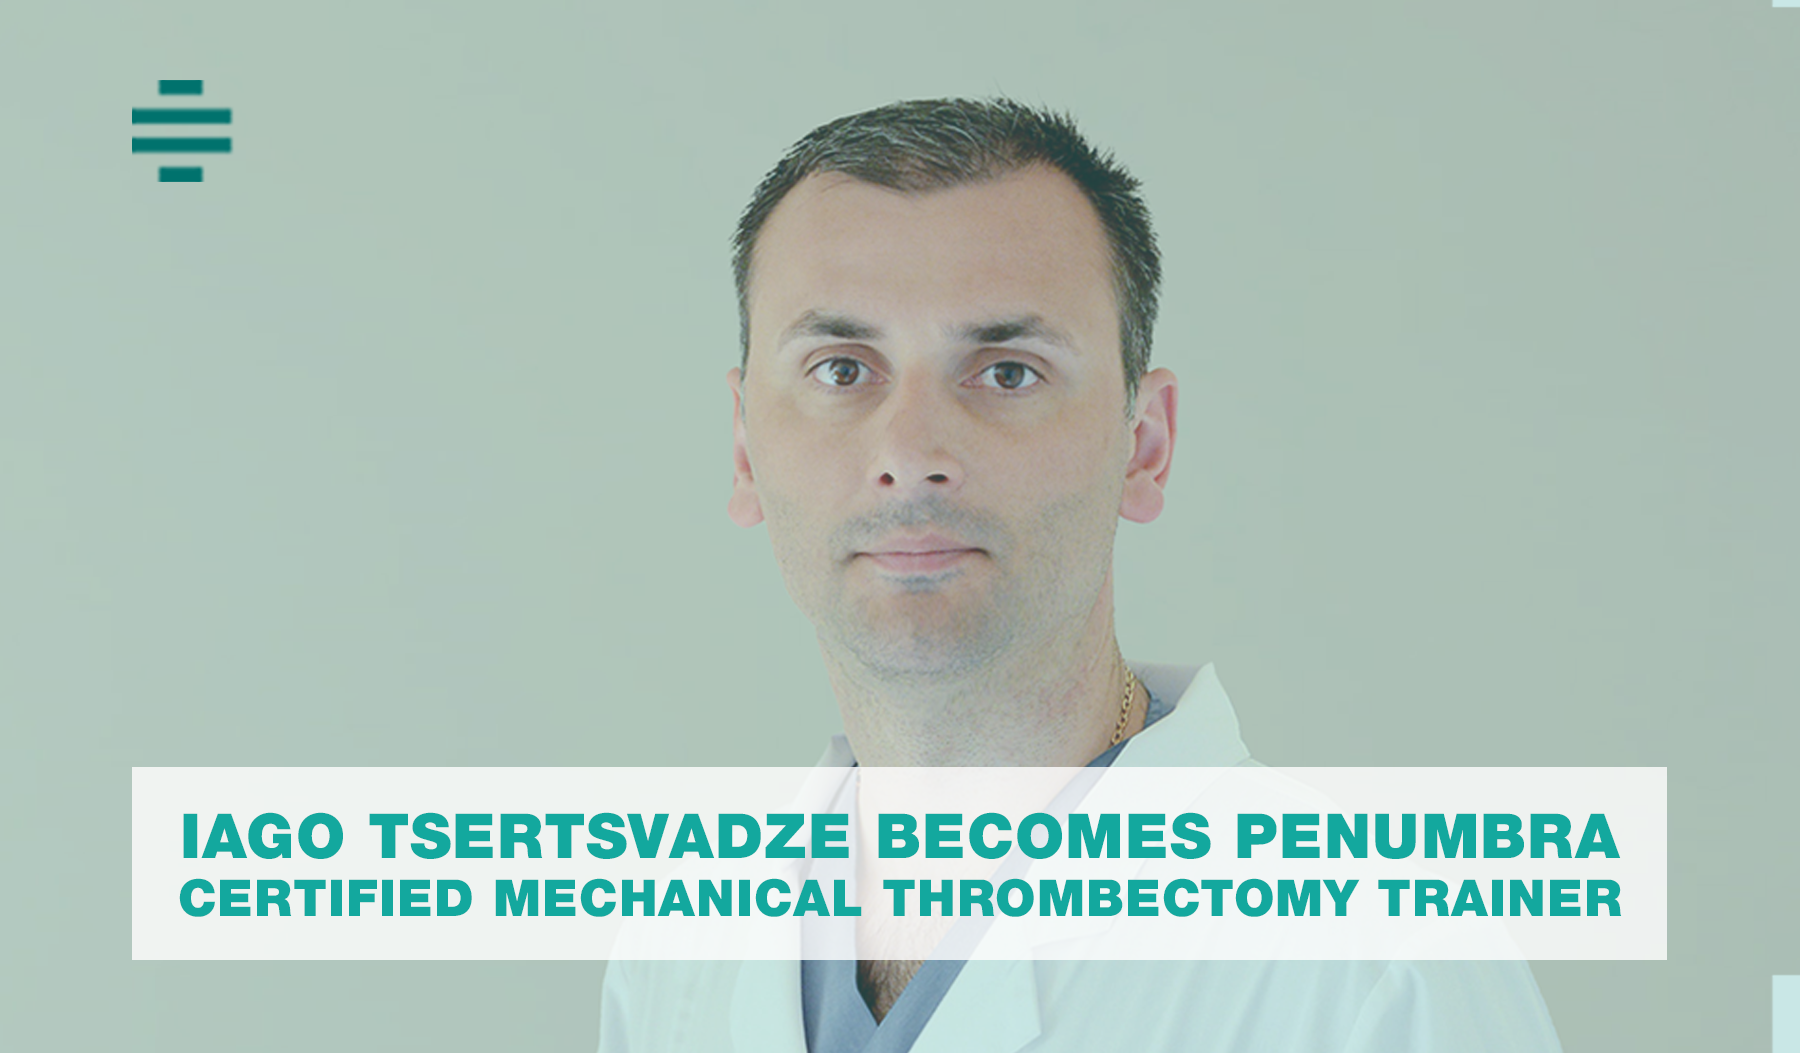 Iago Tsertsvadze Becomes Penumbra Certified Mechanical Thrombectomy Trainer